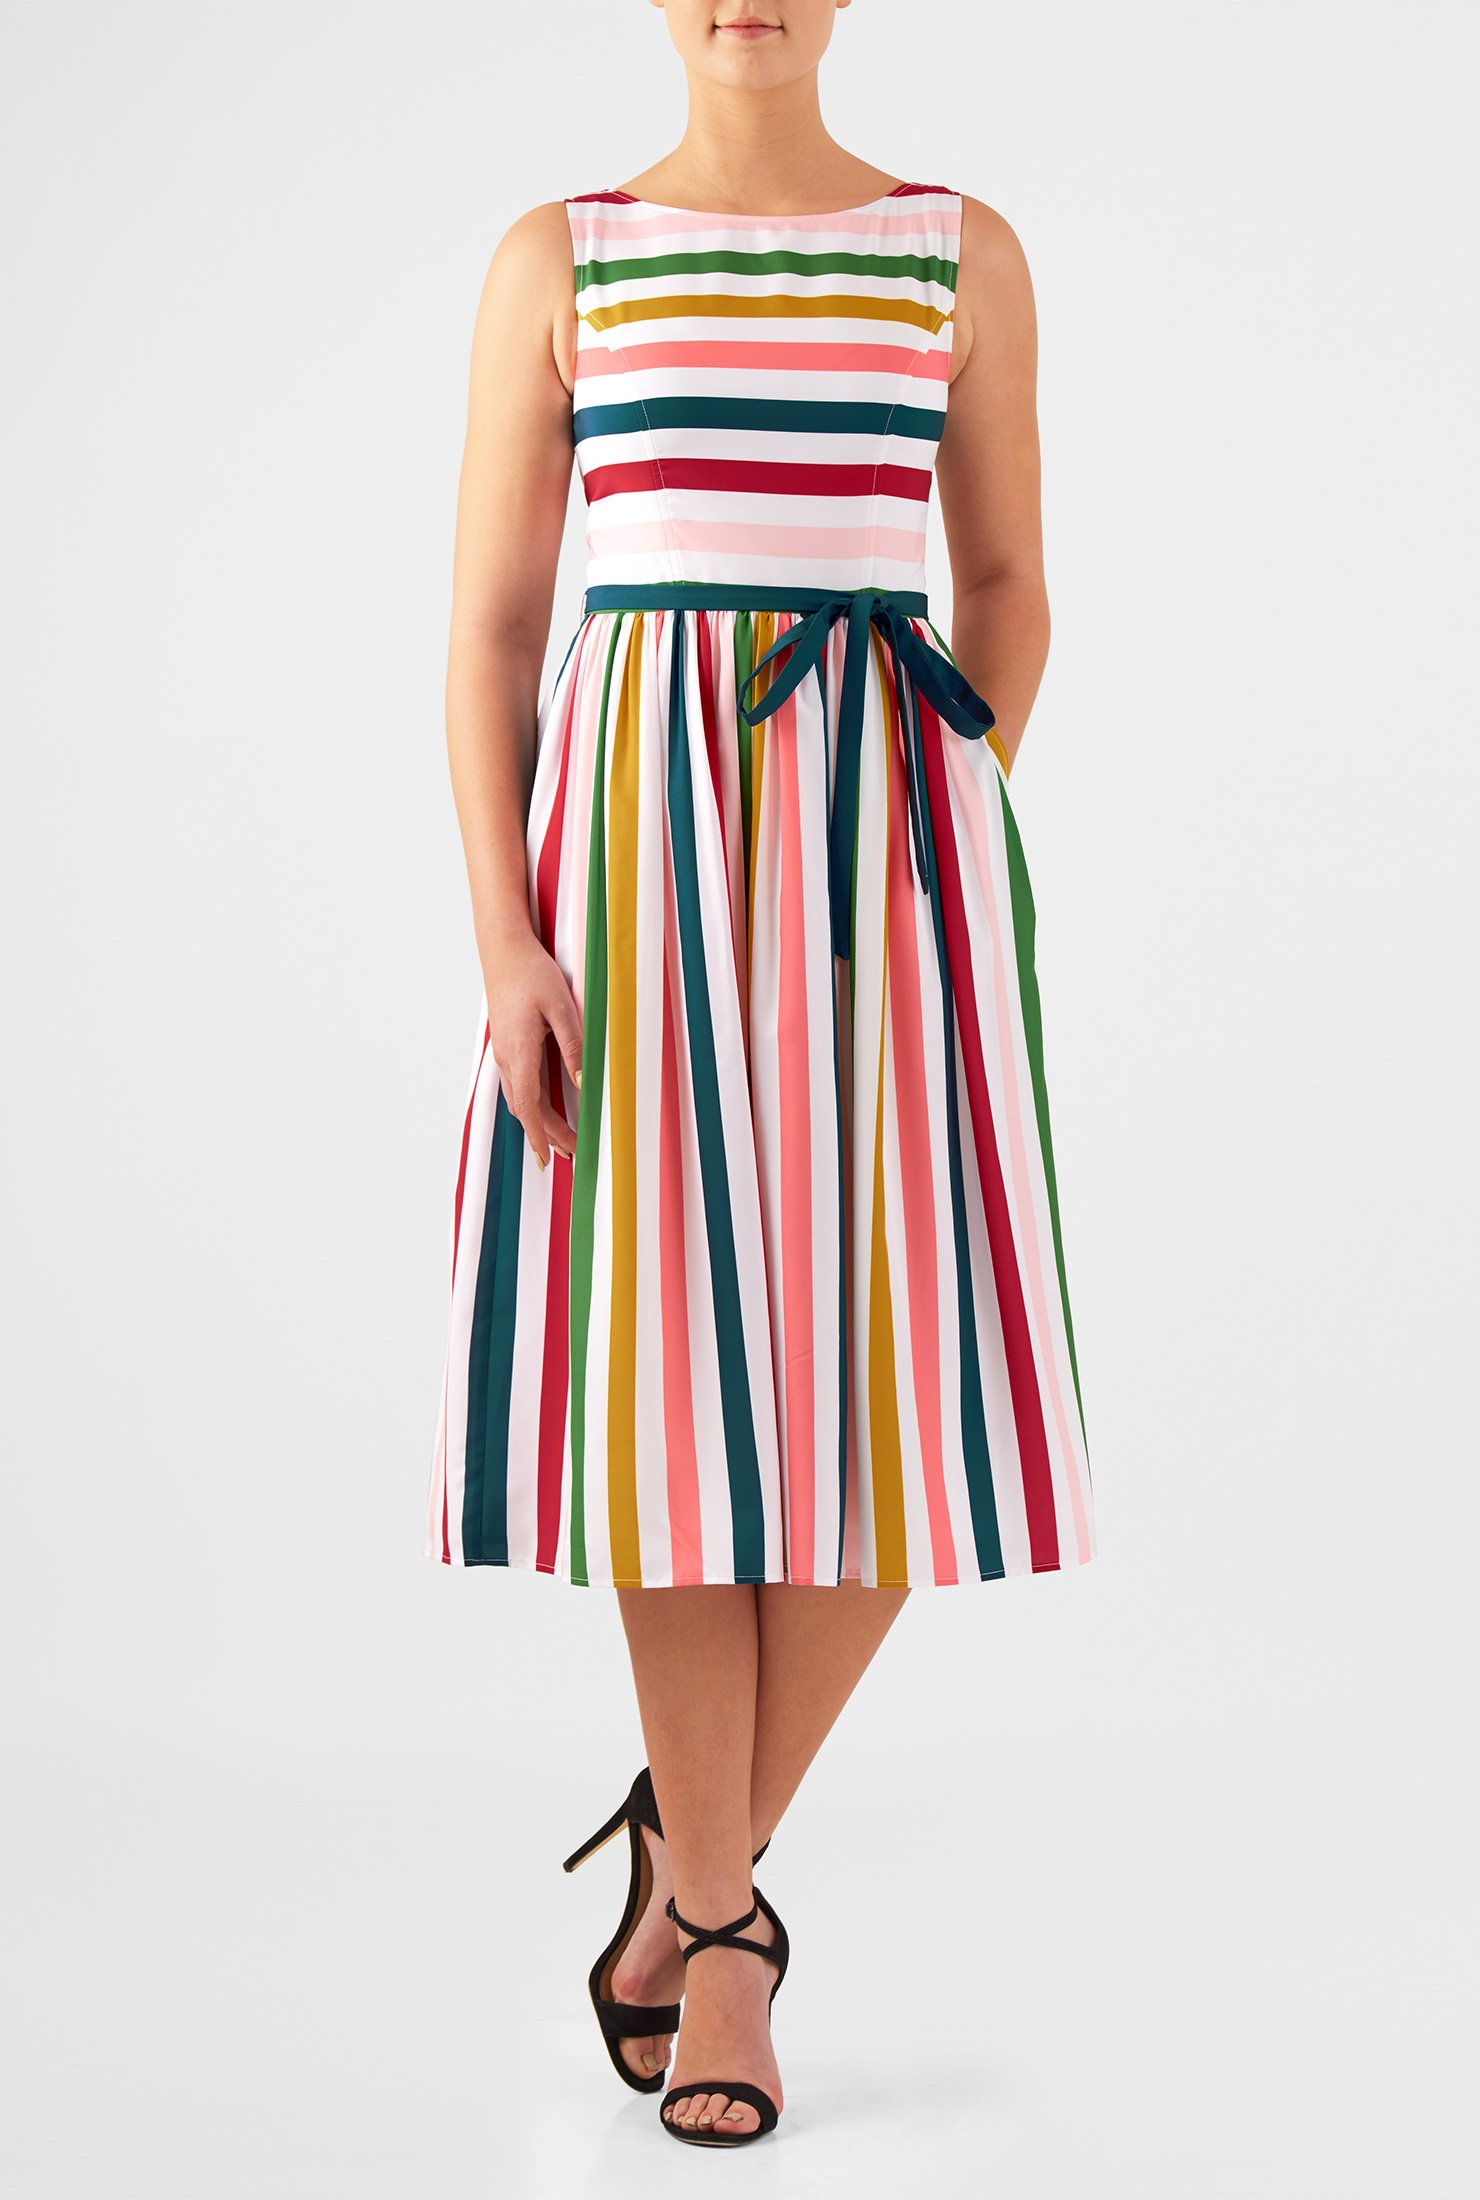 Shop Stripe print crepe sash tie dress | eShakti